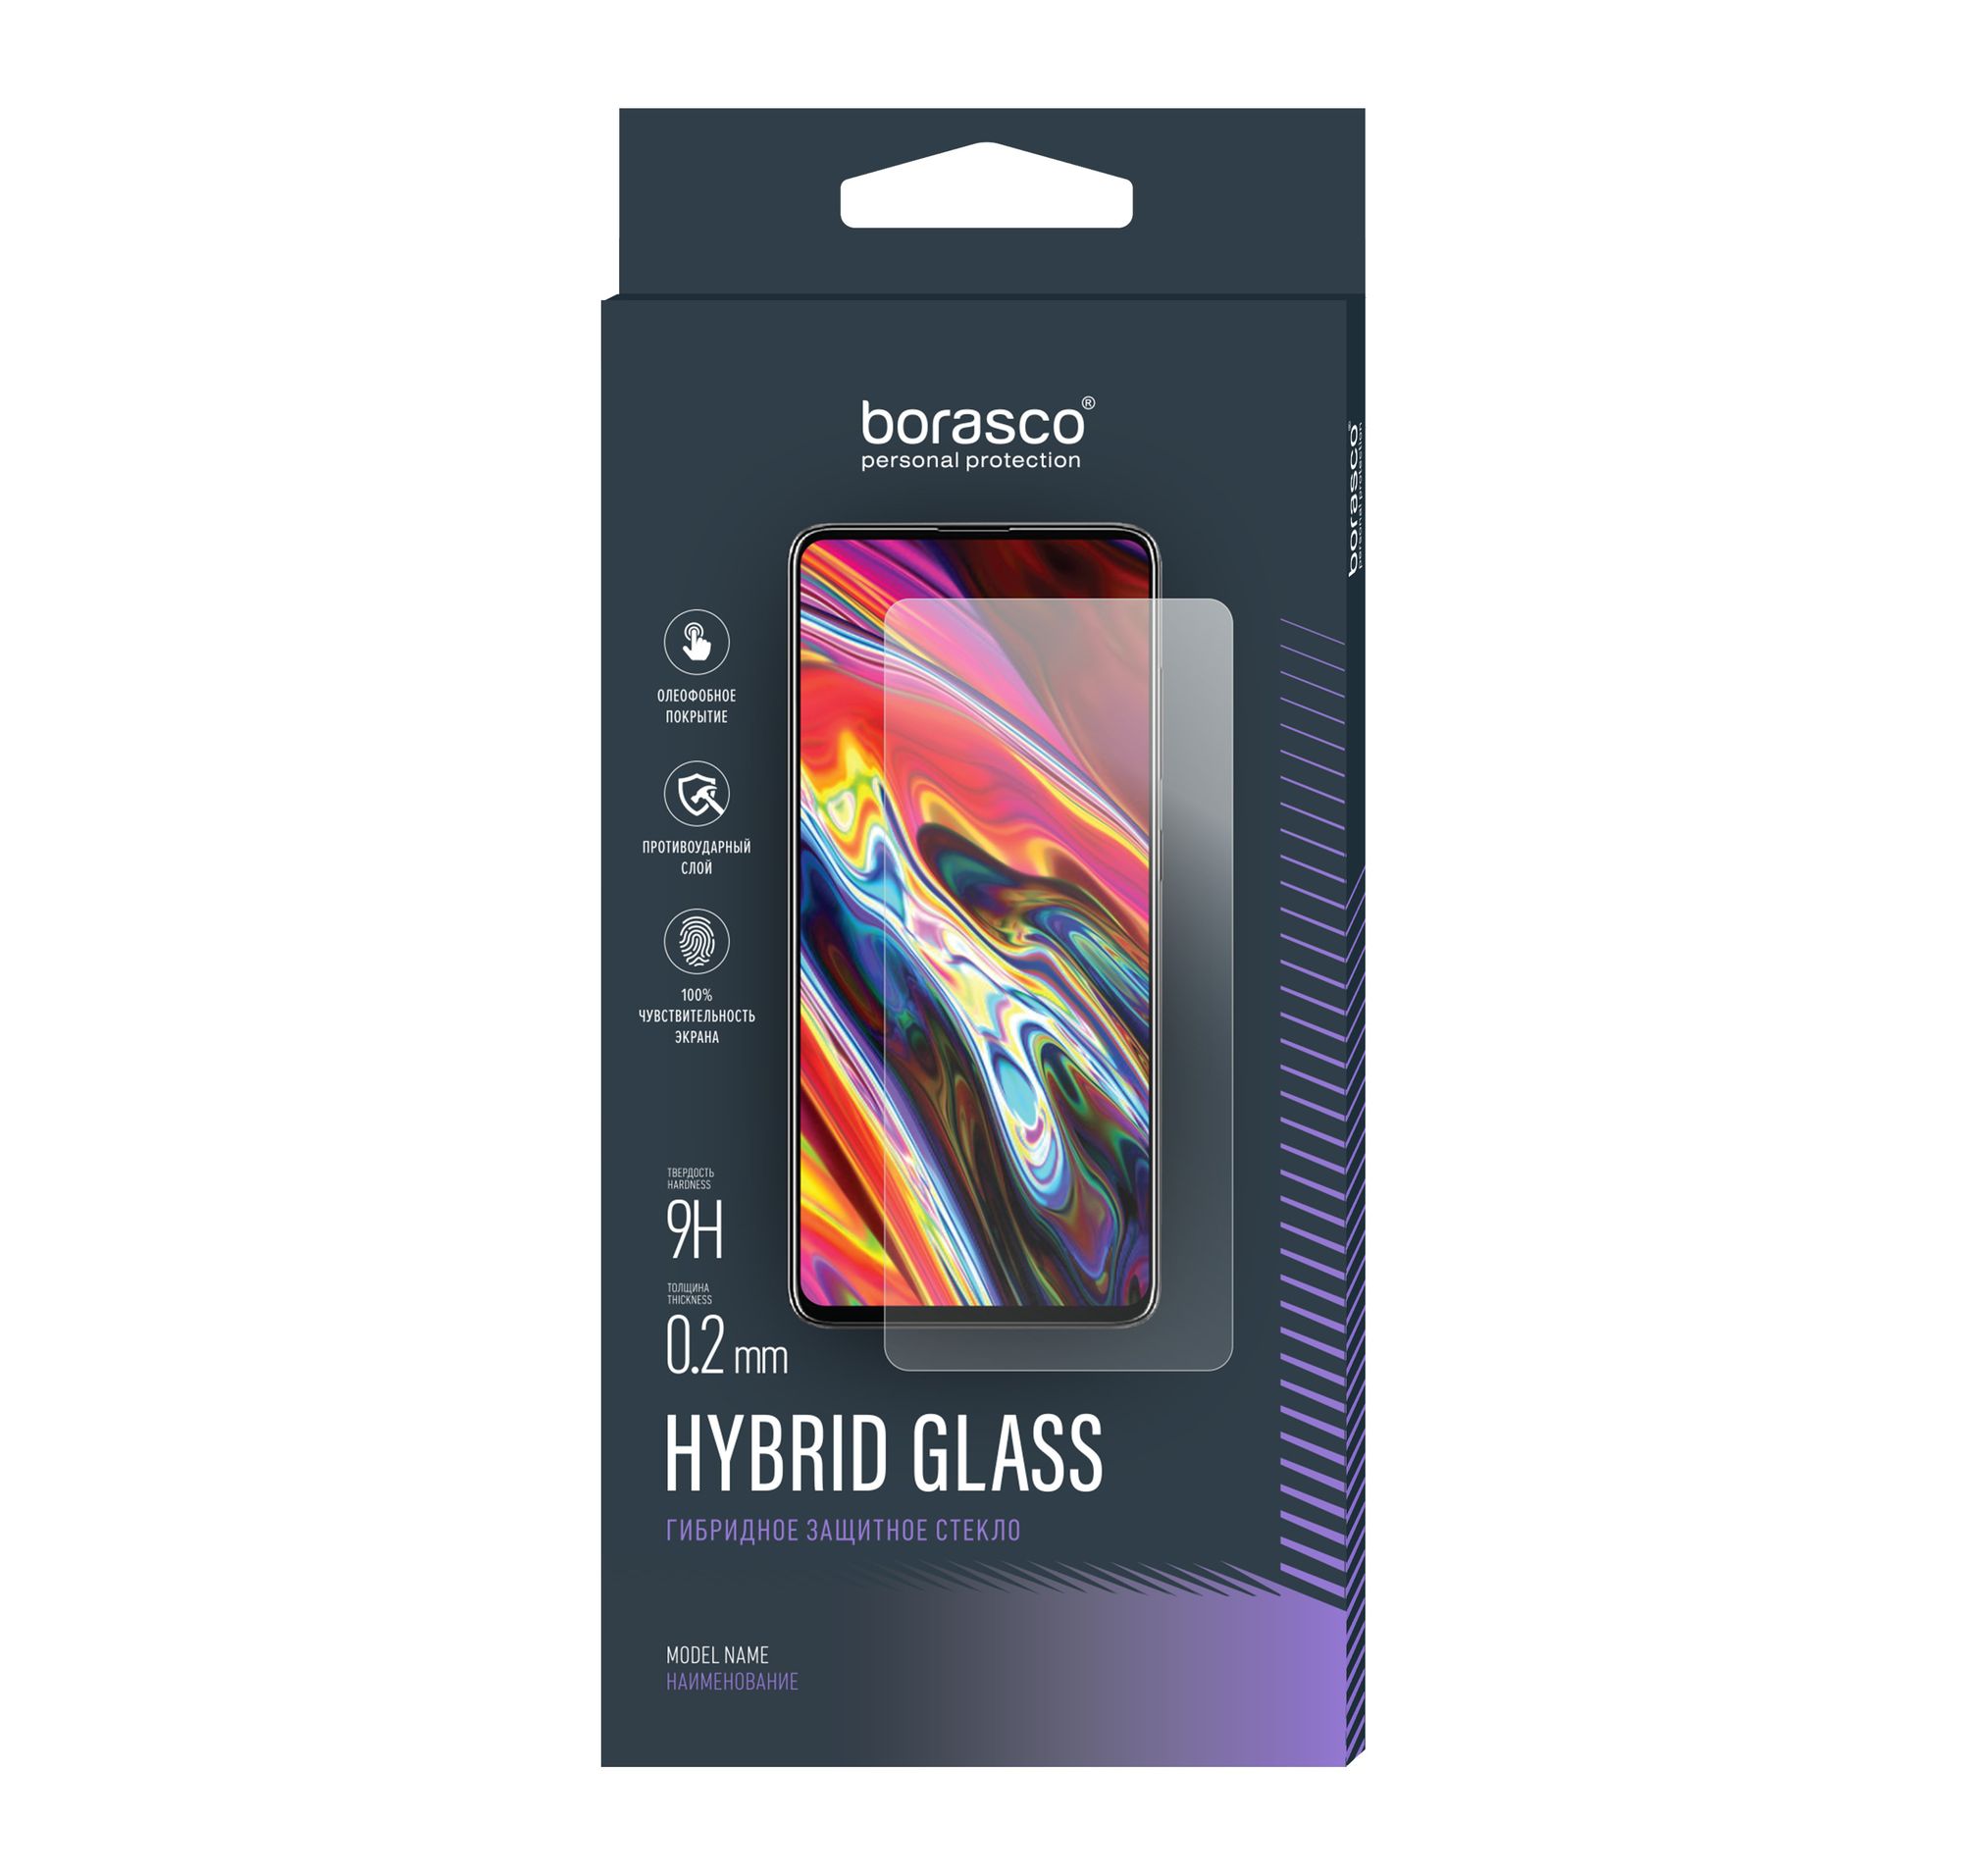 Стекло защитное Hybrid Glass VSP 0,26 мм для Sony Xperia Z1 защитное стекло vsp flex для sony xperia xz1 compact g8441